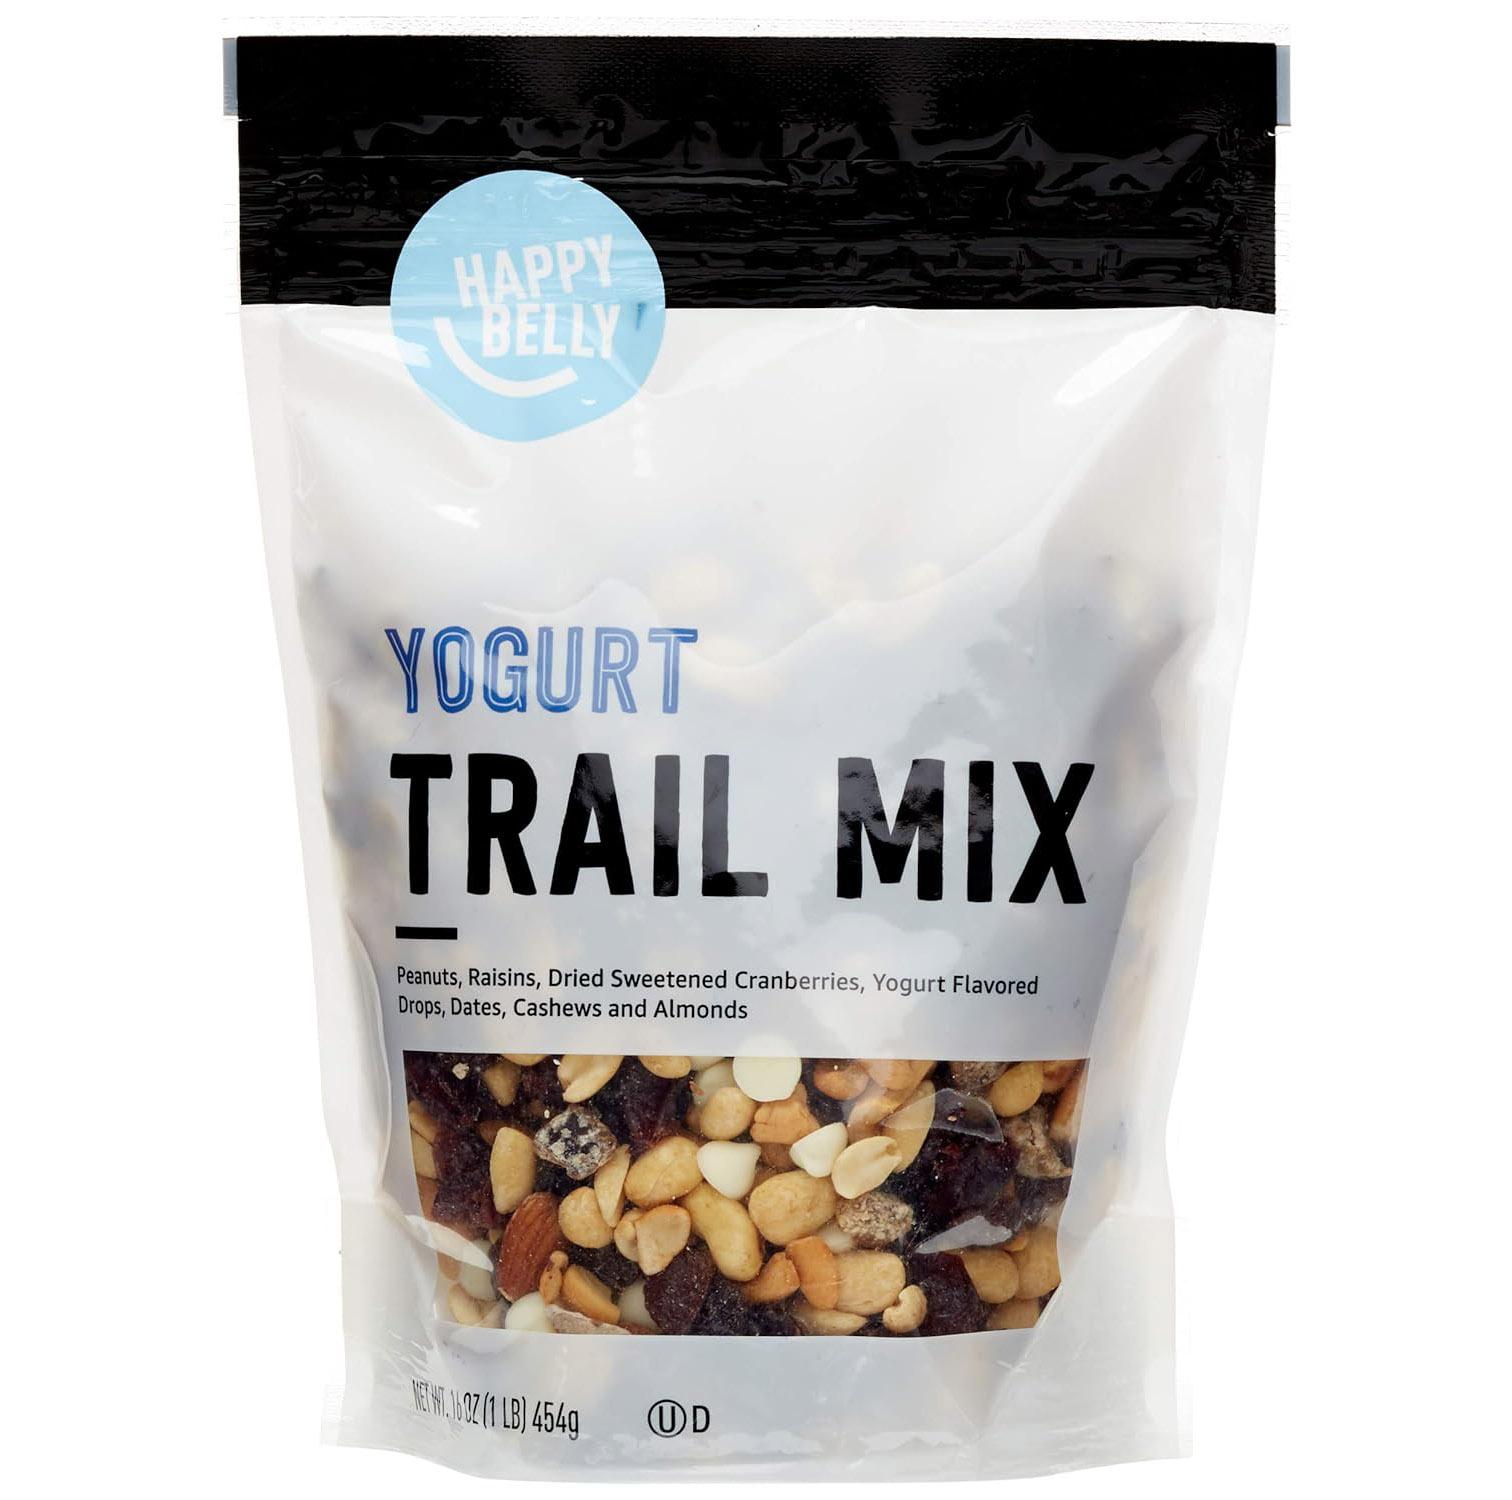 Amazon Brand Happy Belly Yogurt Trail Mix for $3.93